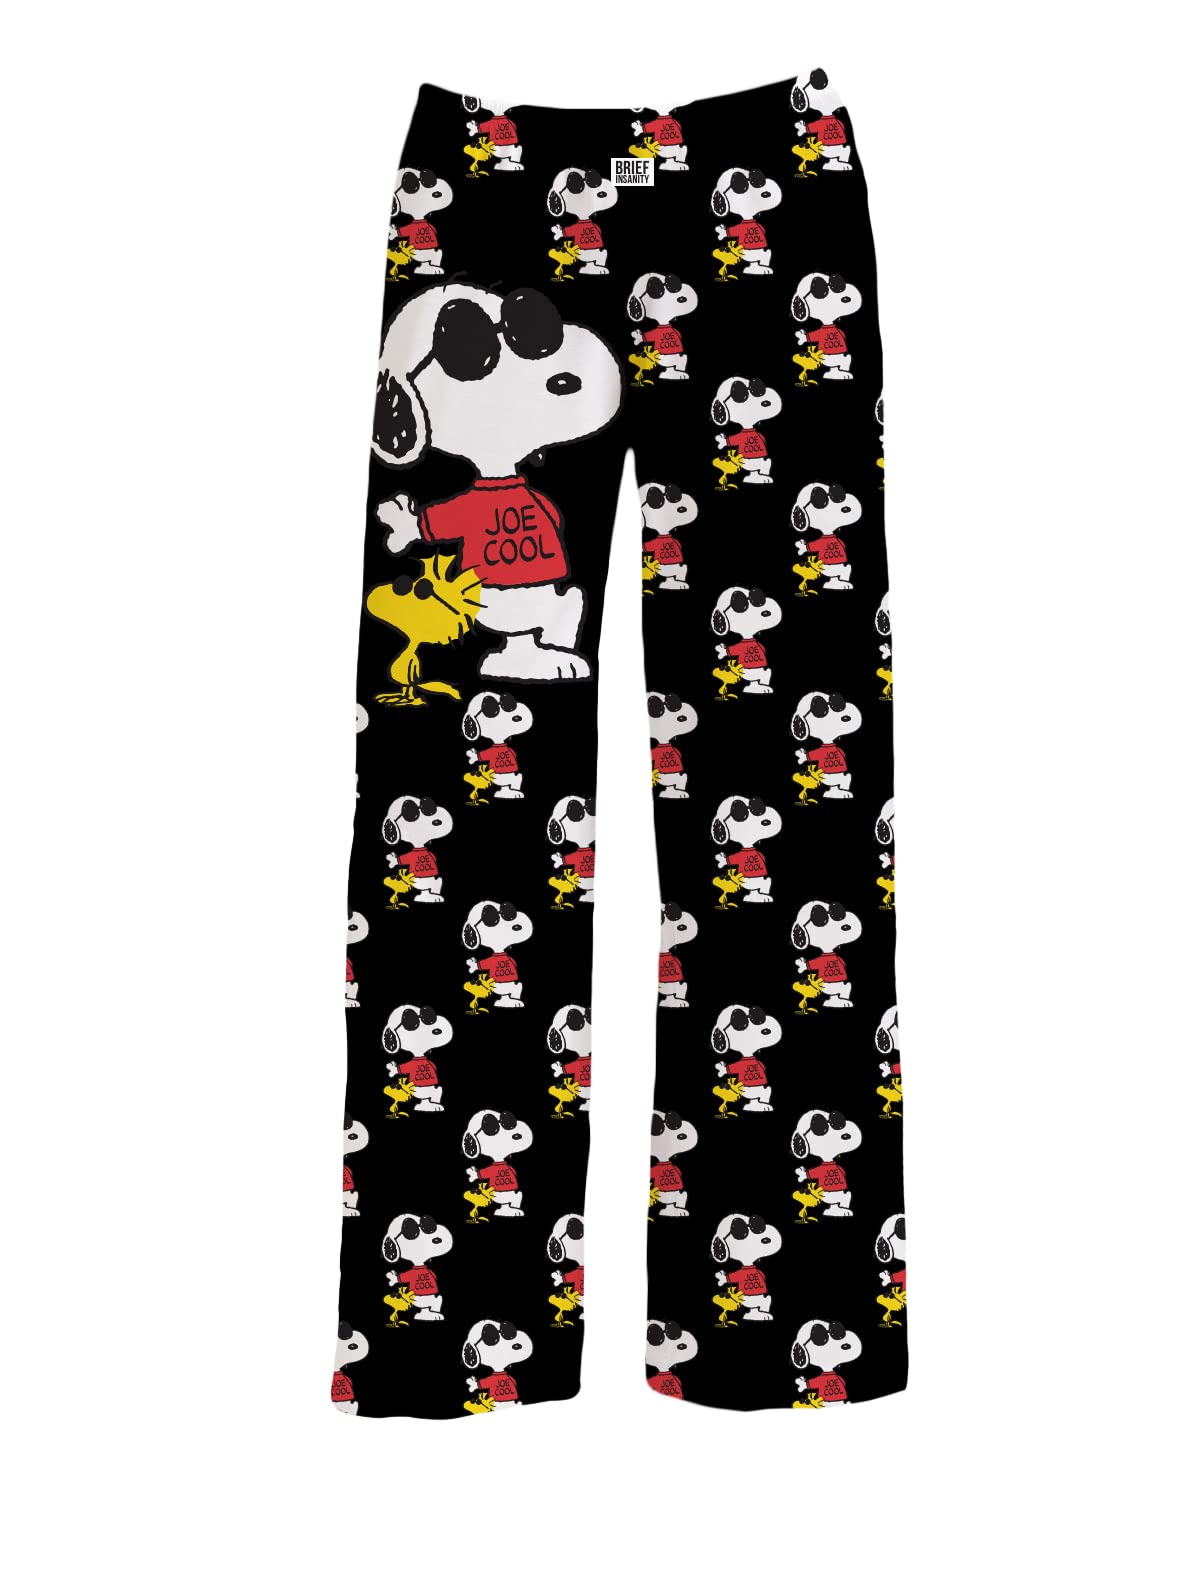 BRIEF INSANITY Snoopy Joe Cool Pajama Lounge Pants